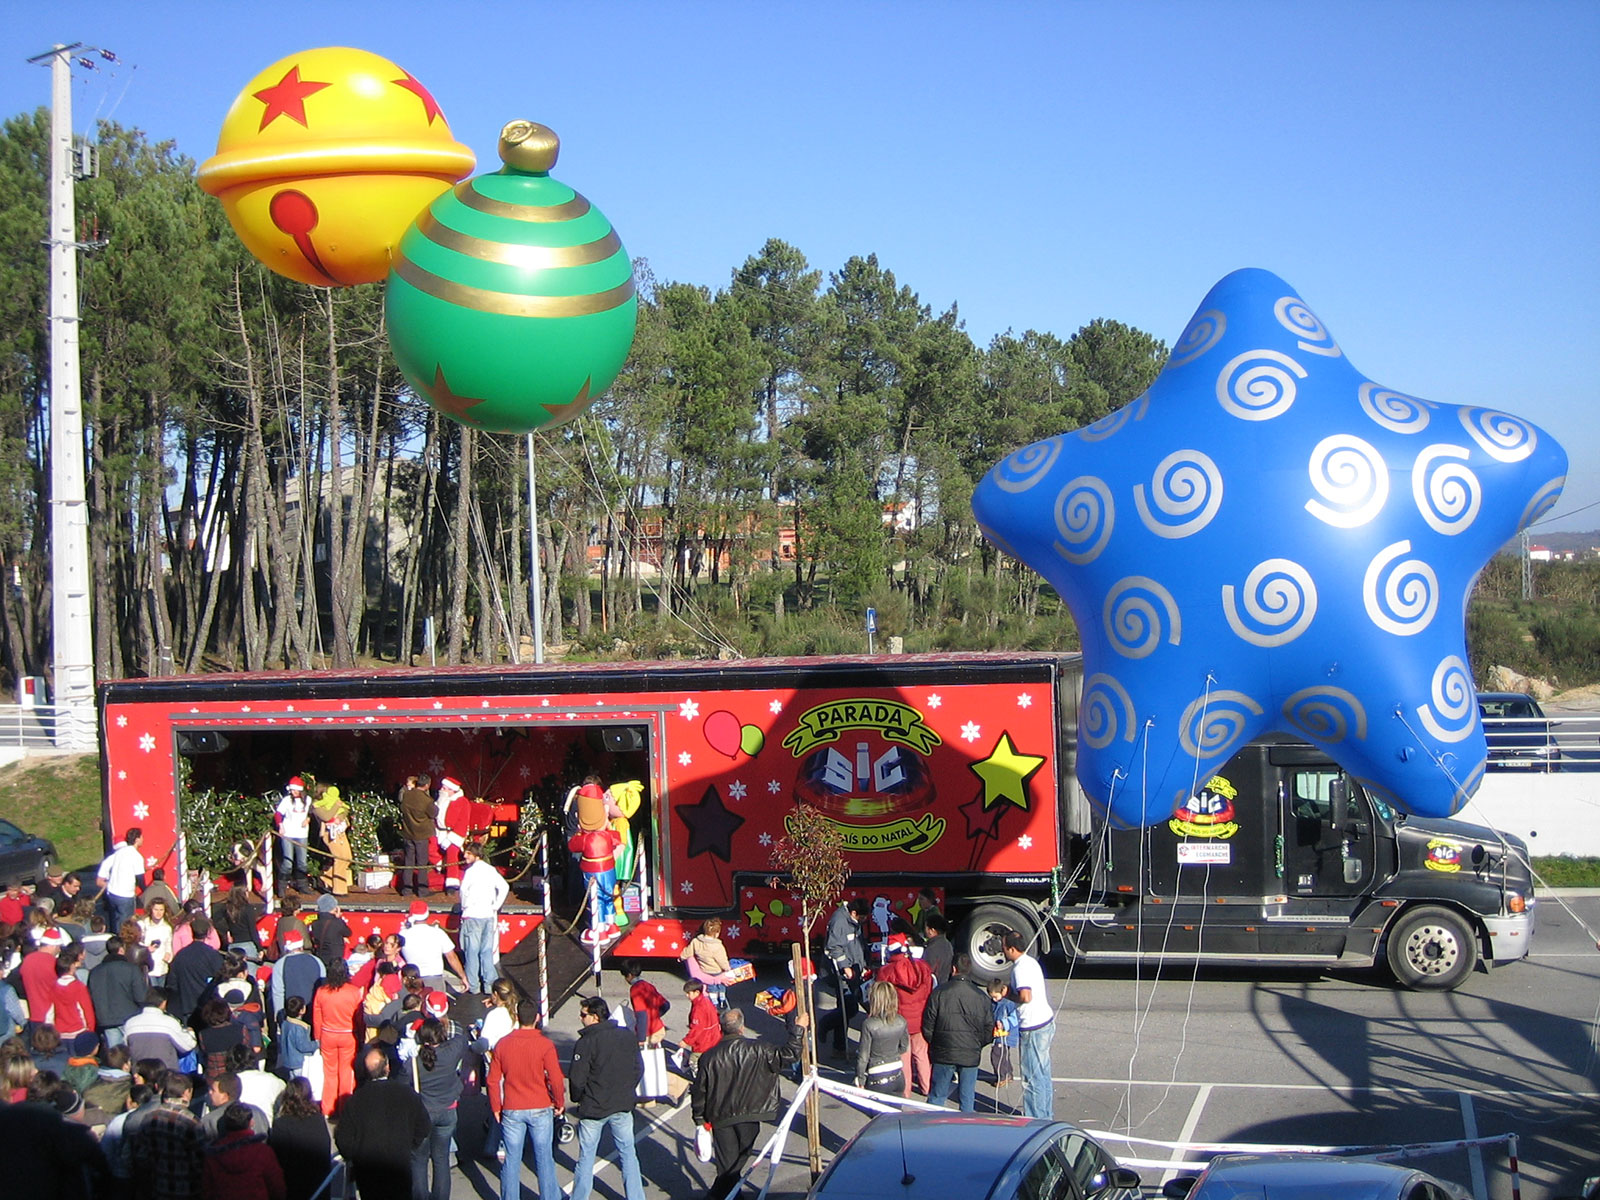 Helium Parade Balloons -14' Christmas Ornaments